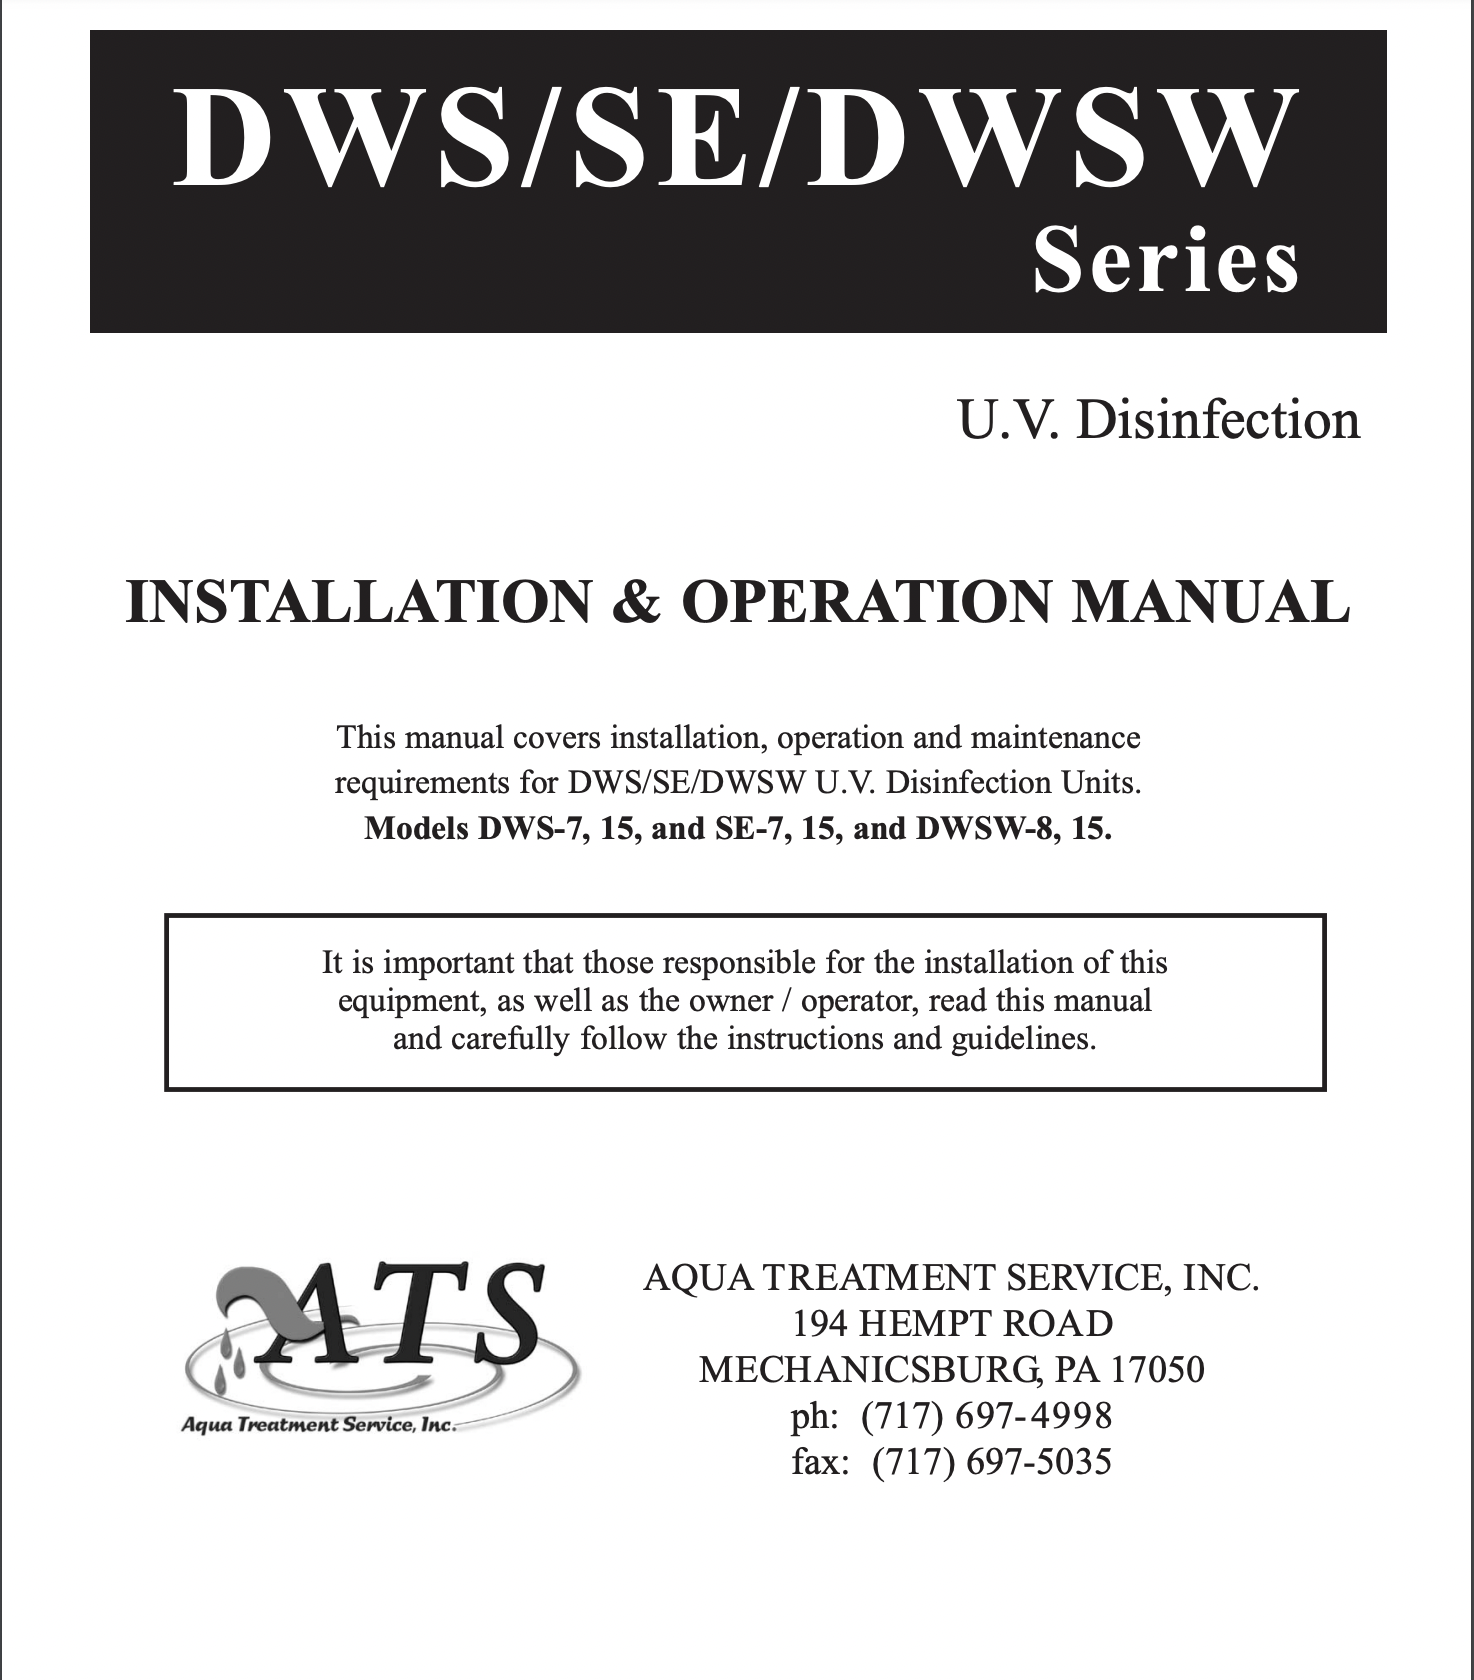 DWS/SE/DWSW Series